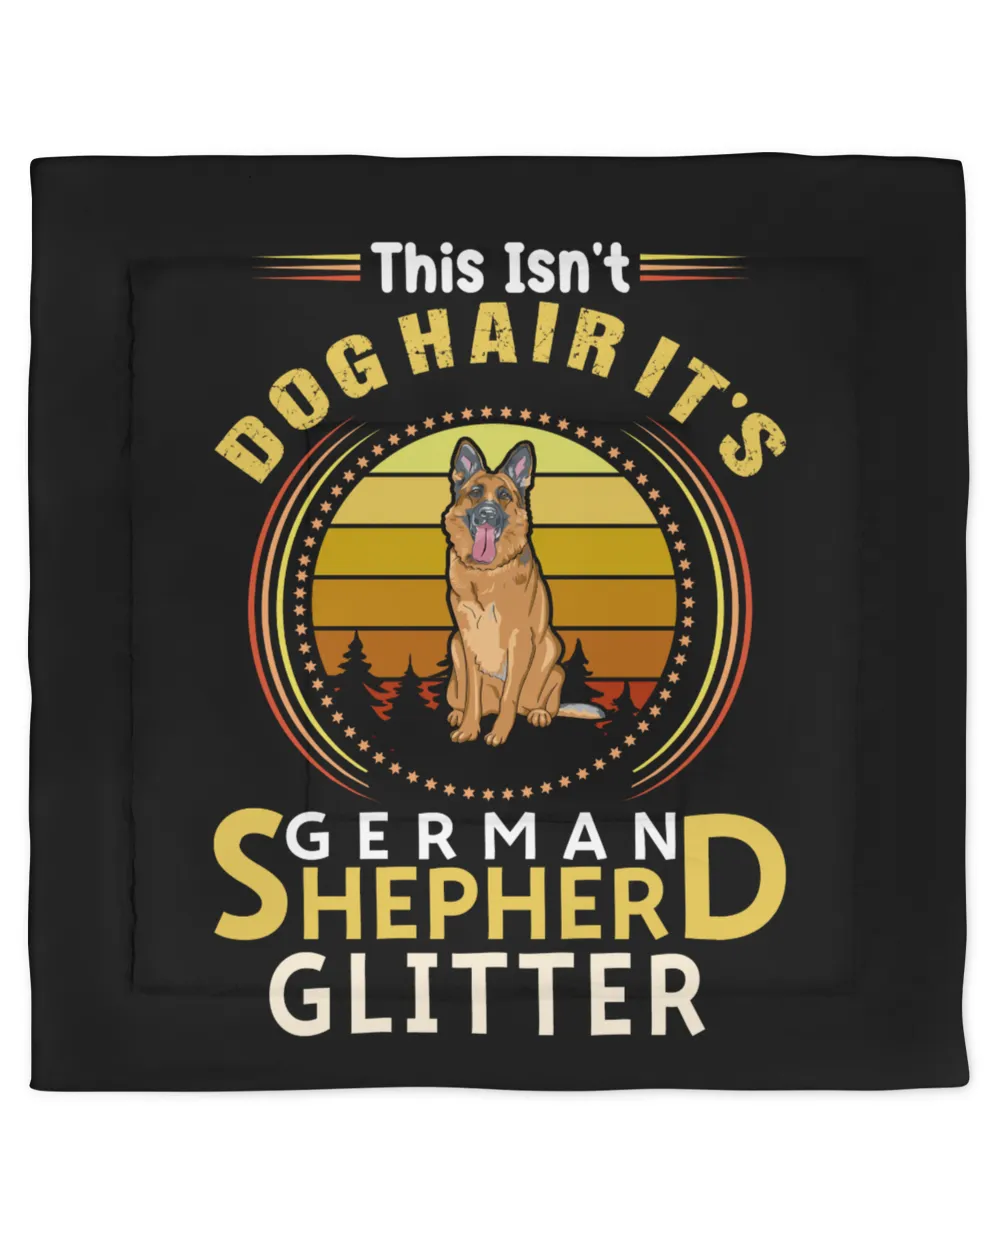 This Isn't Dog Hair It's German Shepherd Glitter Personalized Grandpa Grandma Mom Sister For Dog Lovers